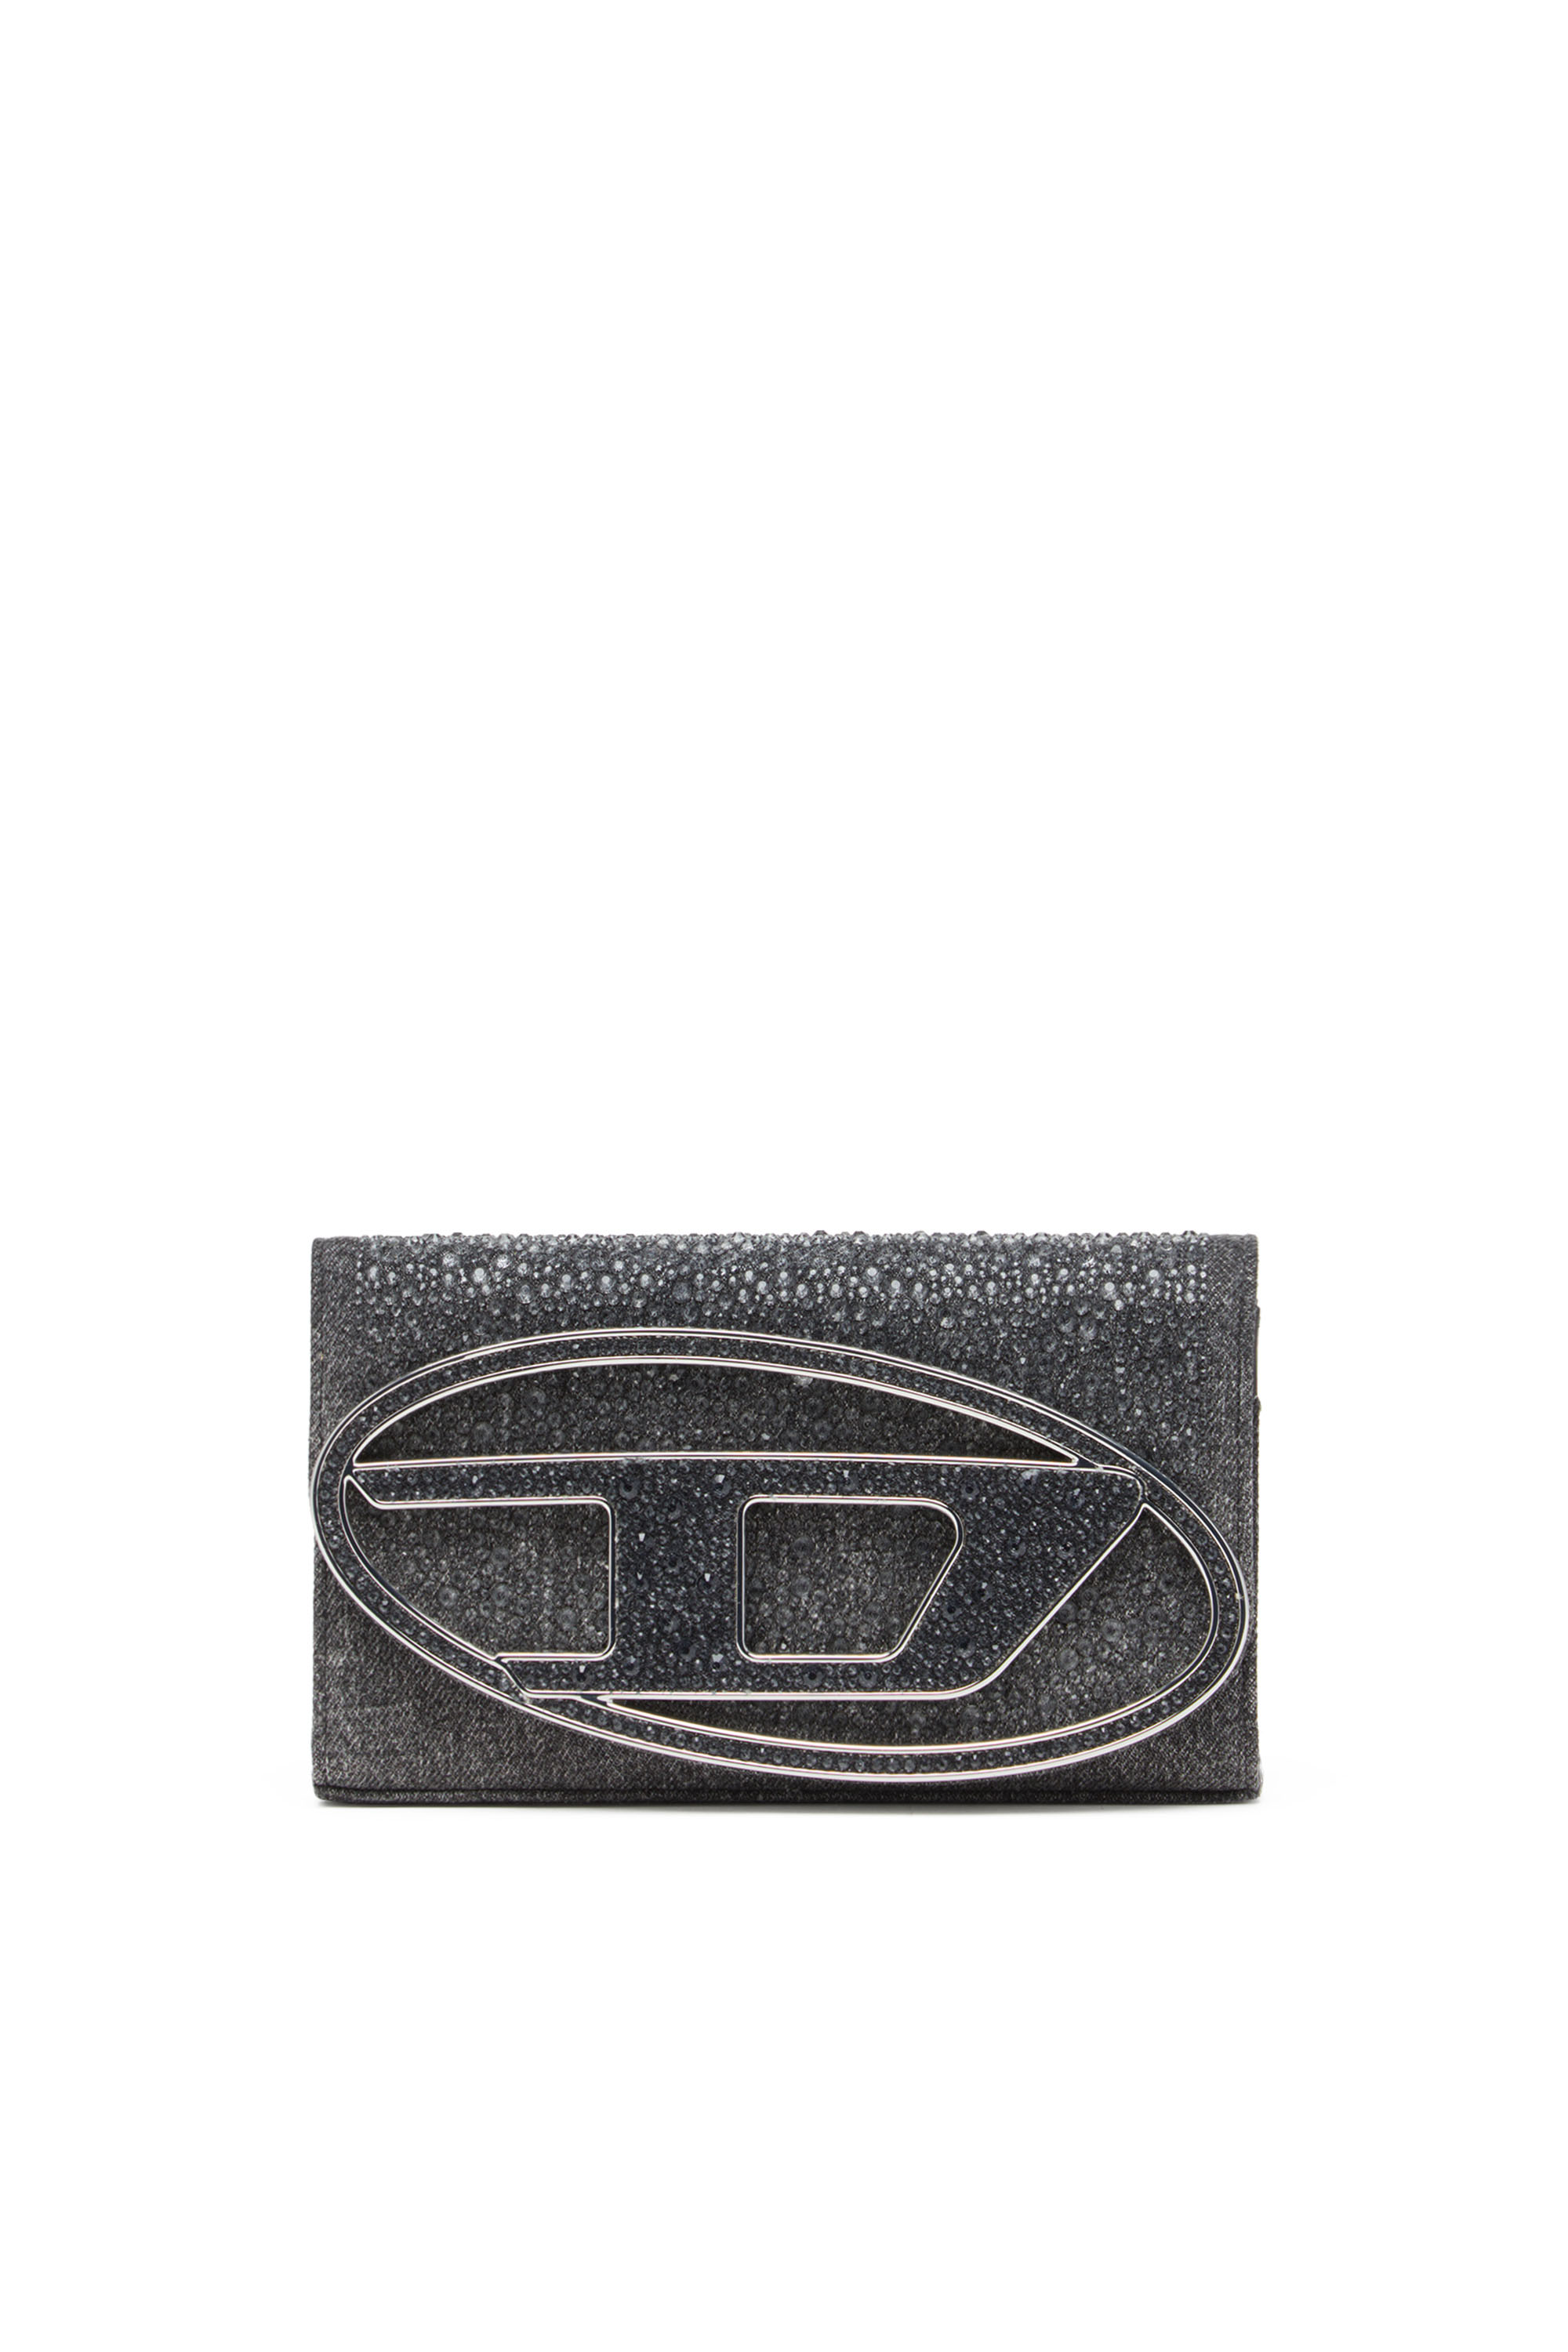 Diesel - 1DR WALLET STRAP, Female Wallet purse in crystal denim in ブラック - Image 1